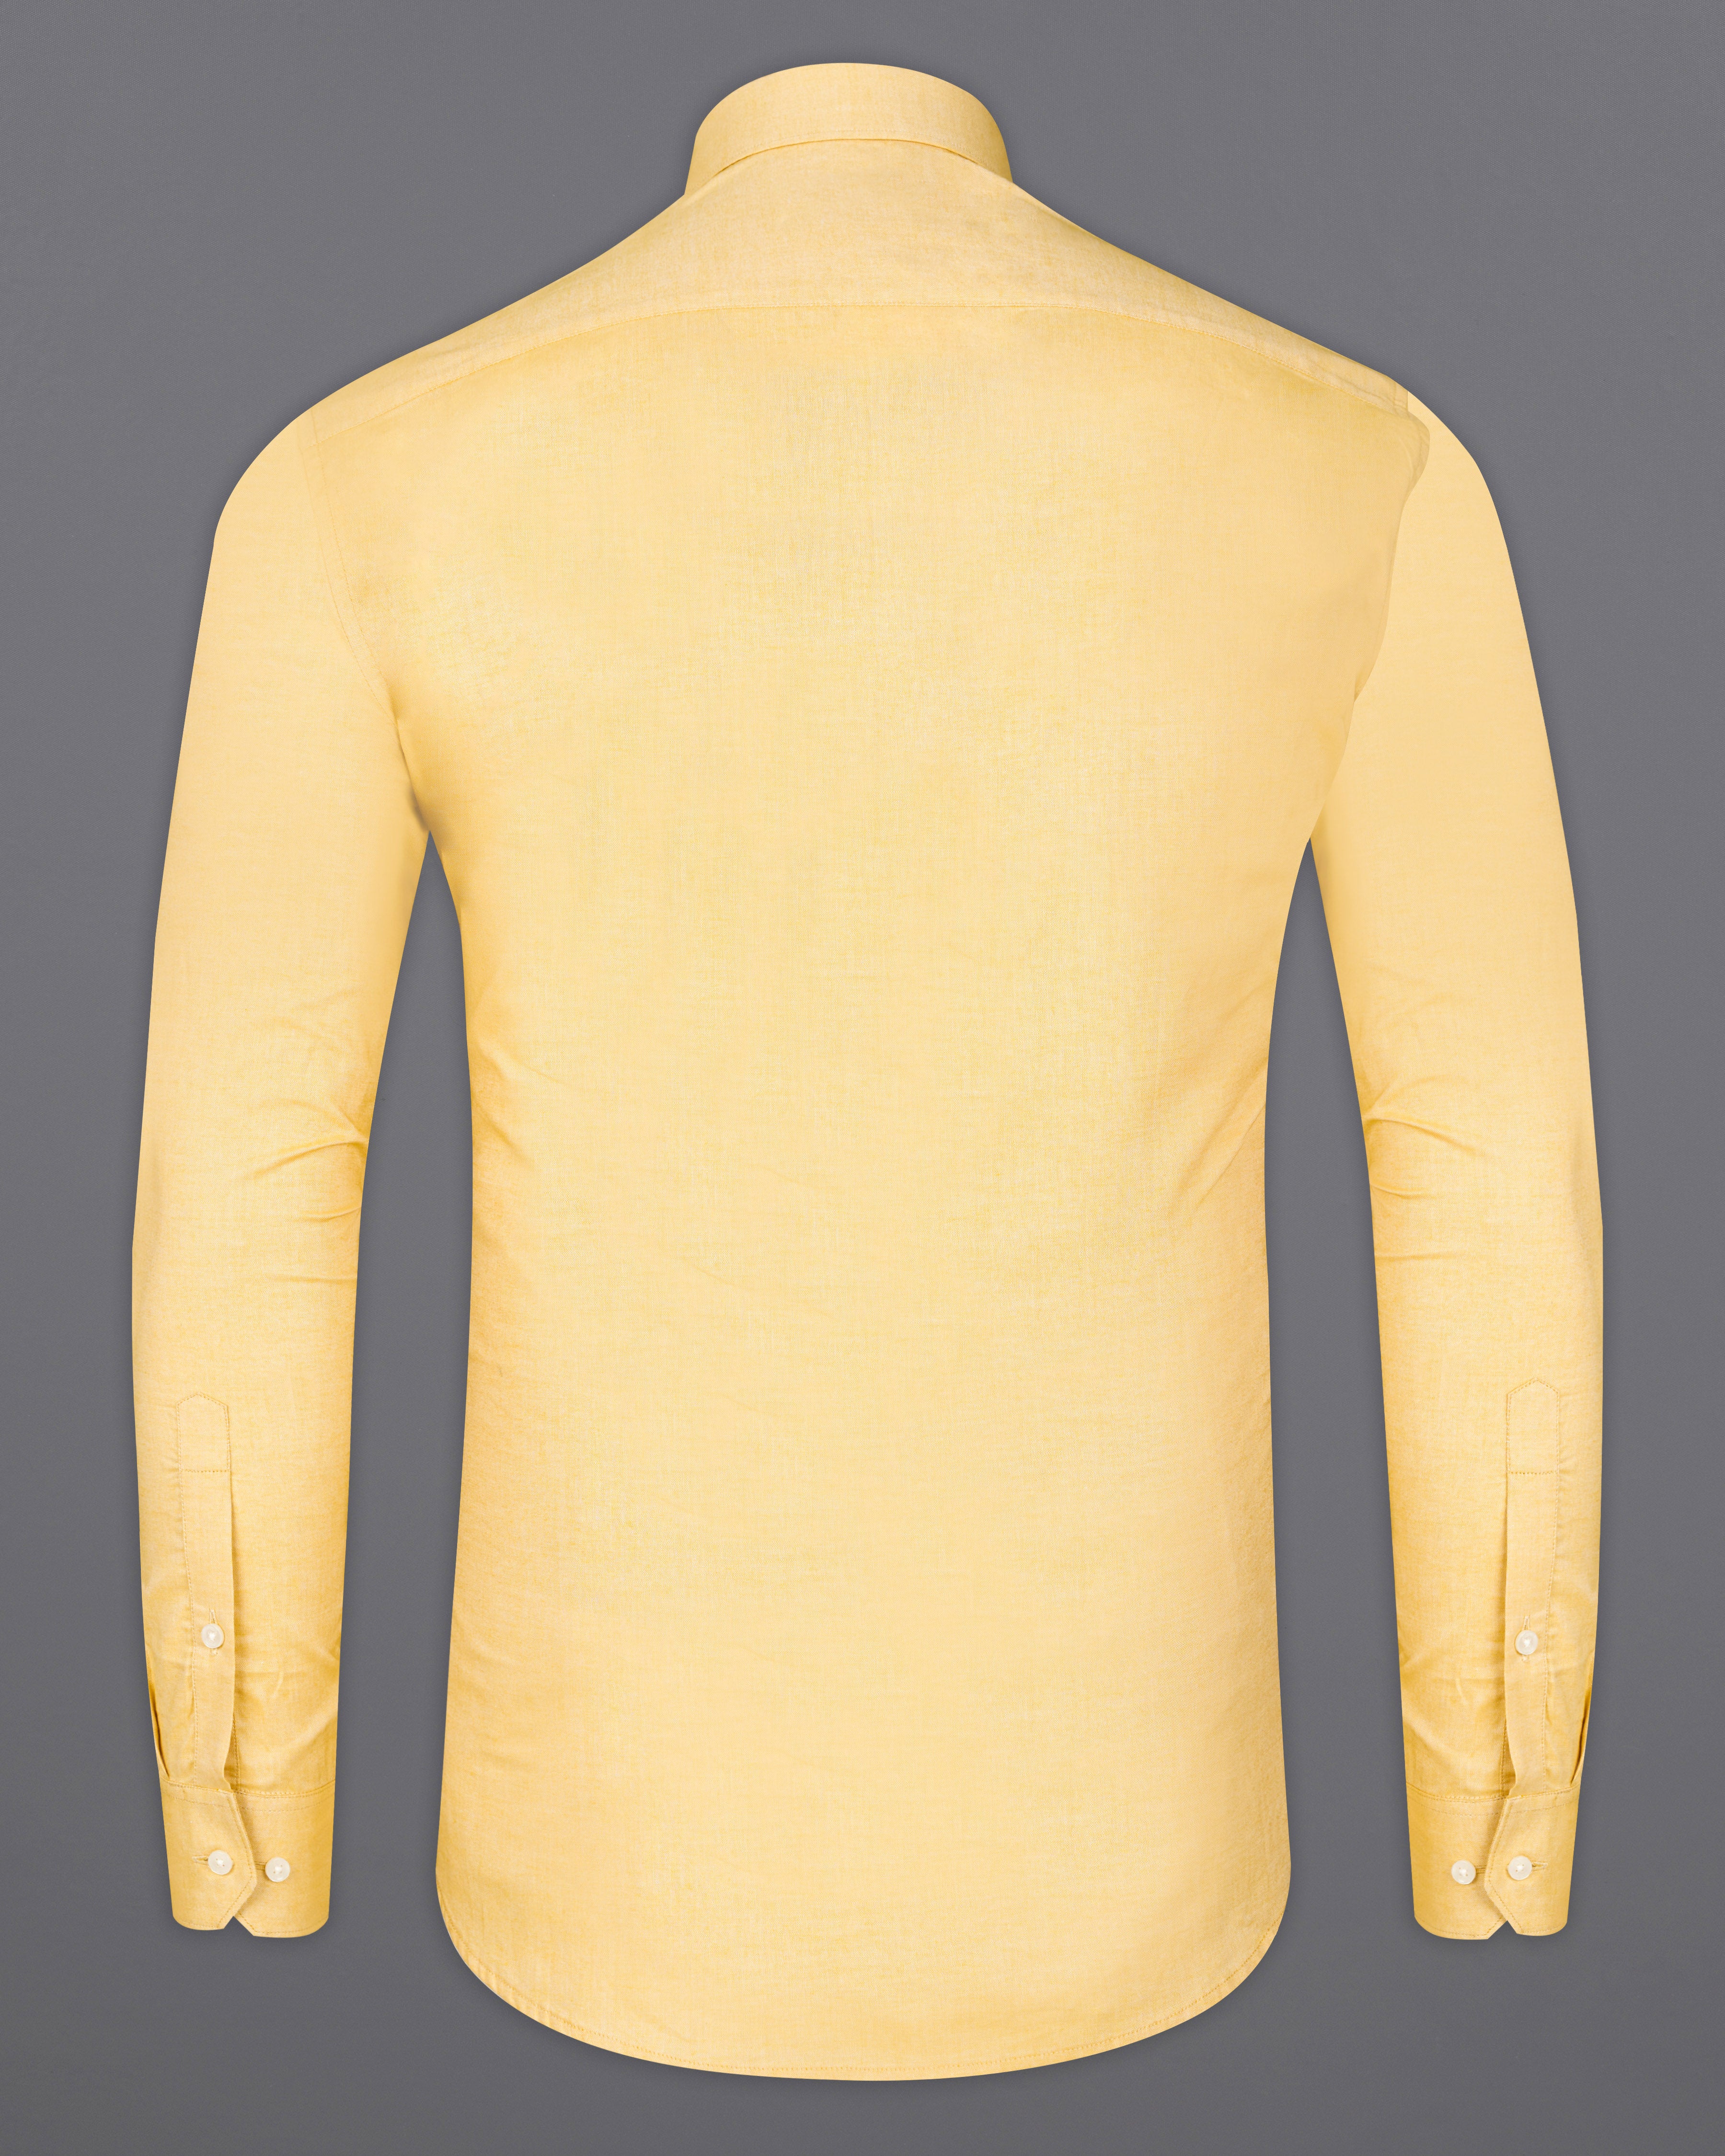 Maize Yellow Royal Oxford Shirt 9651-38,9651-H-38,9651-39,9651-H-39,9651-40,9651-H-40,9651-42,9651-H-42,9651-44,9651-H-44,9651-46,9651-H-46,9651-48,9651-H-48,9651-50,9651-H-50,9651-52,9651-H-52